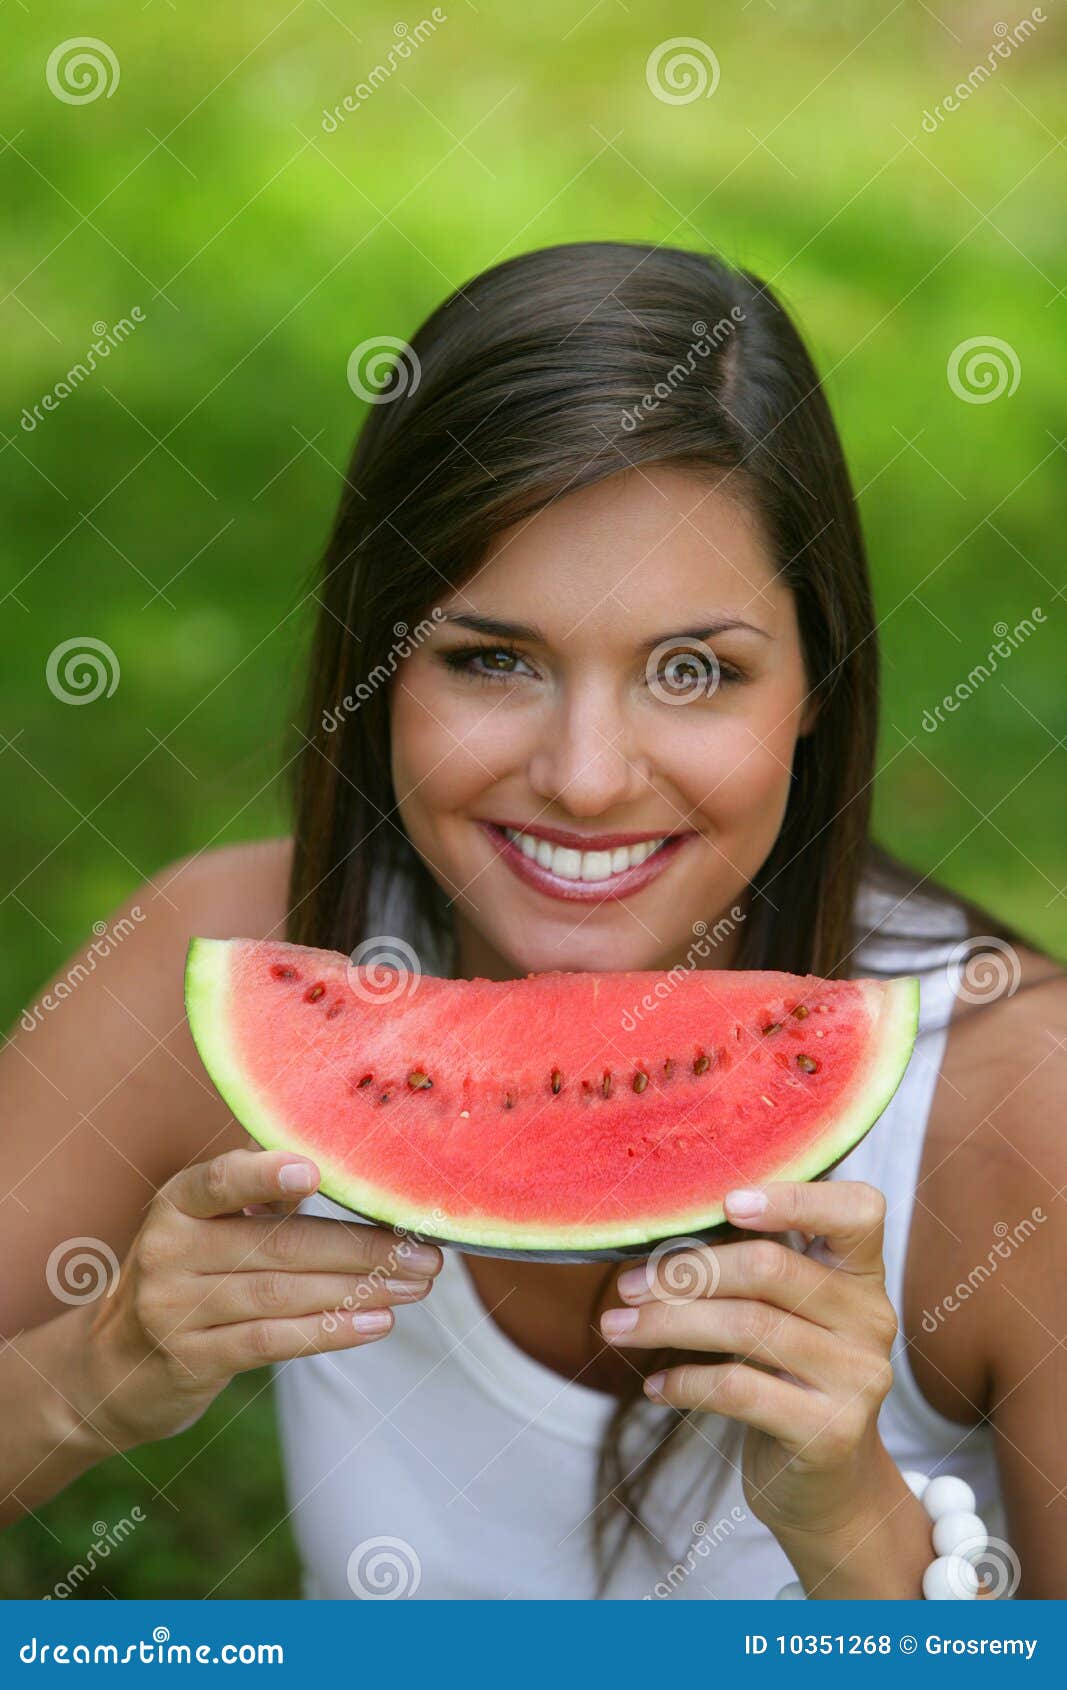 Watermelon Teen 6